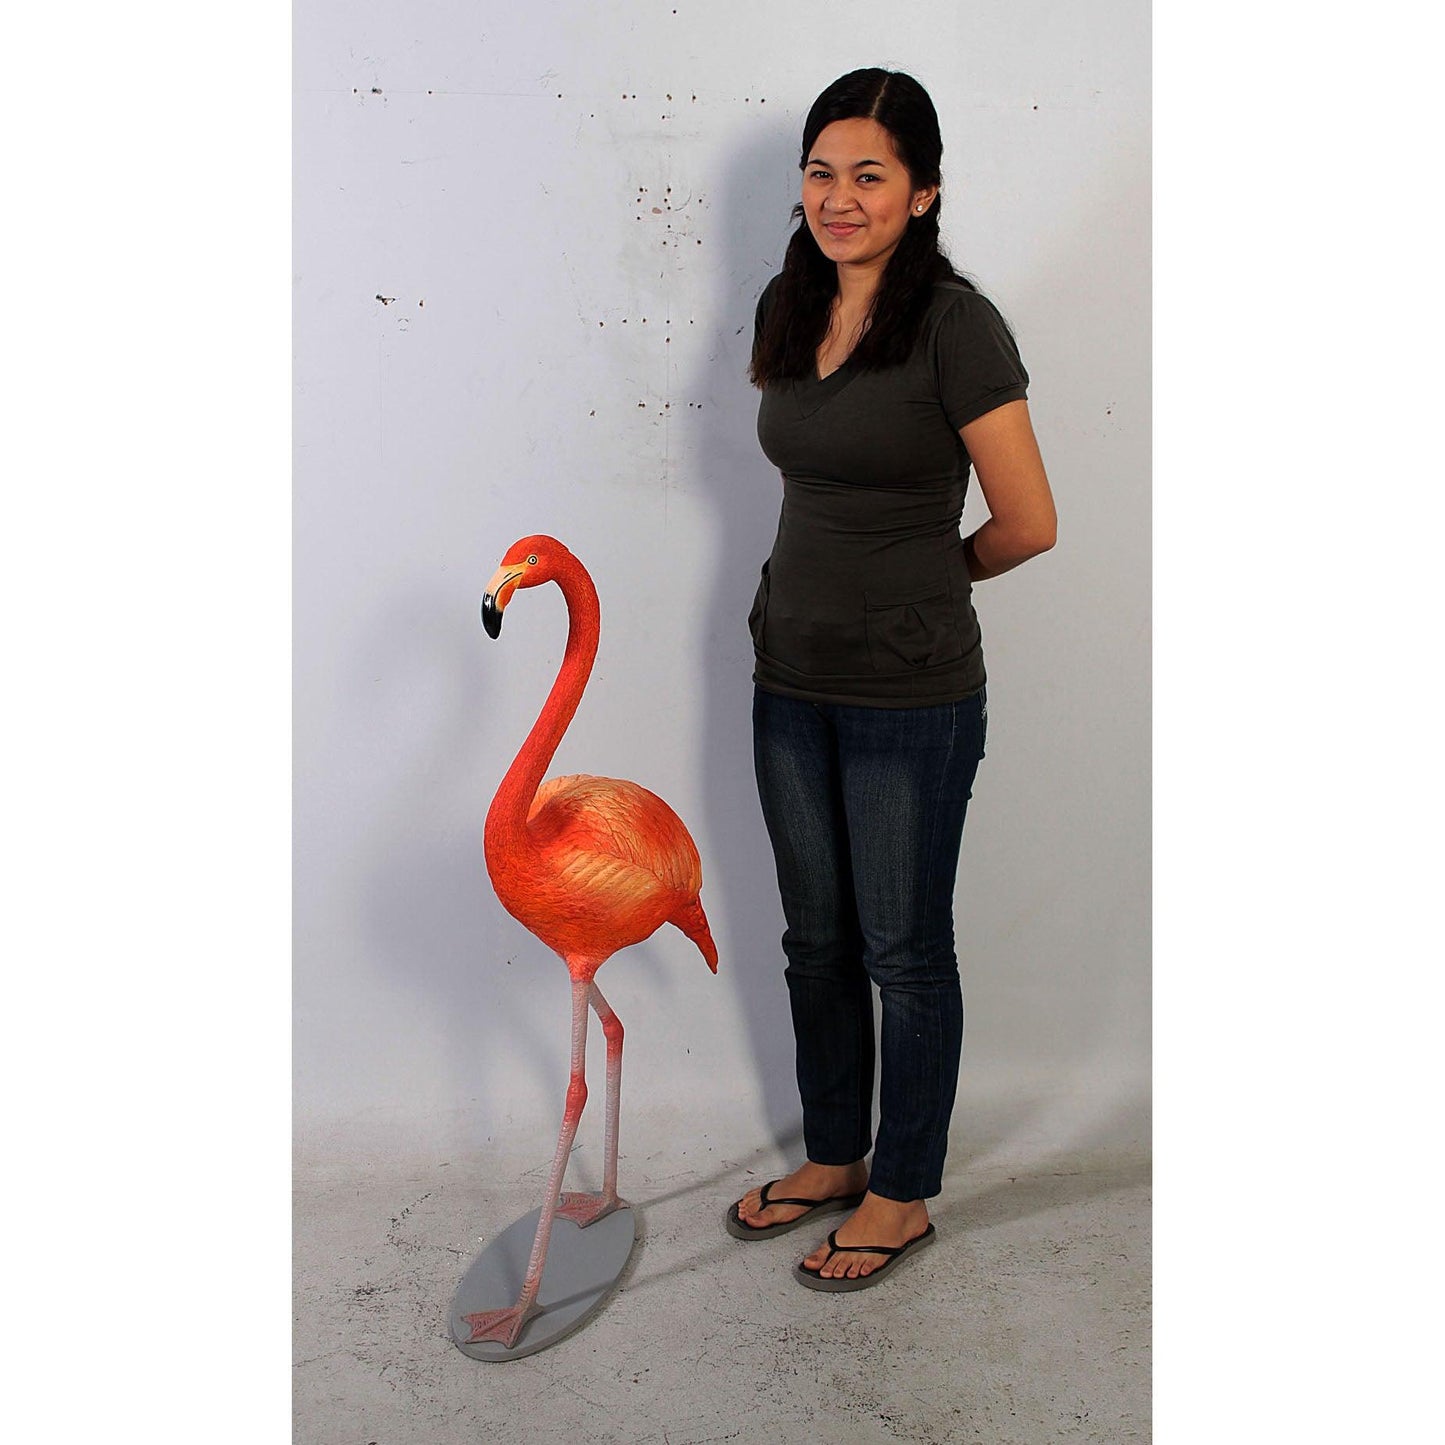 Orange Flamingo Life Size Statue